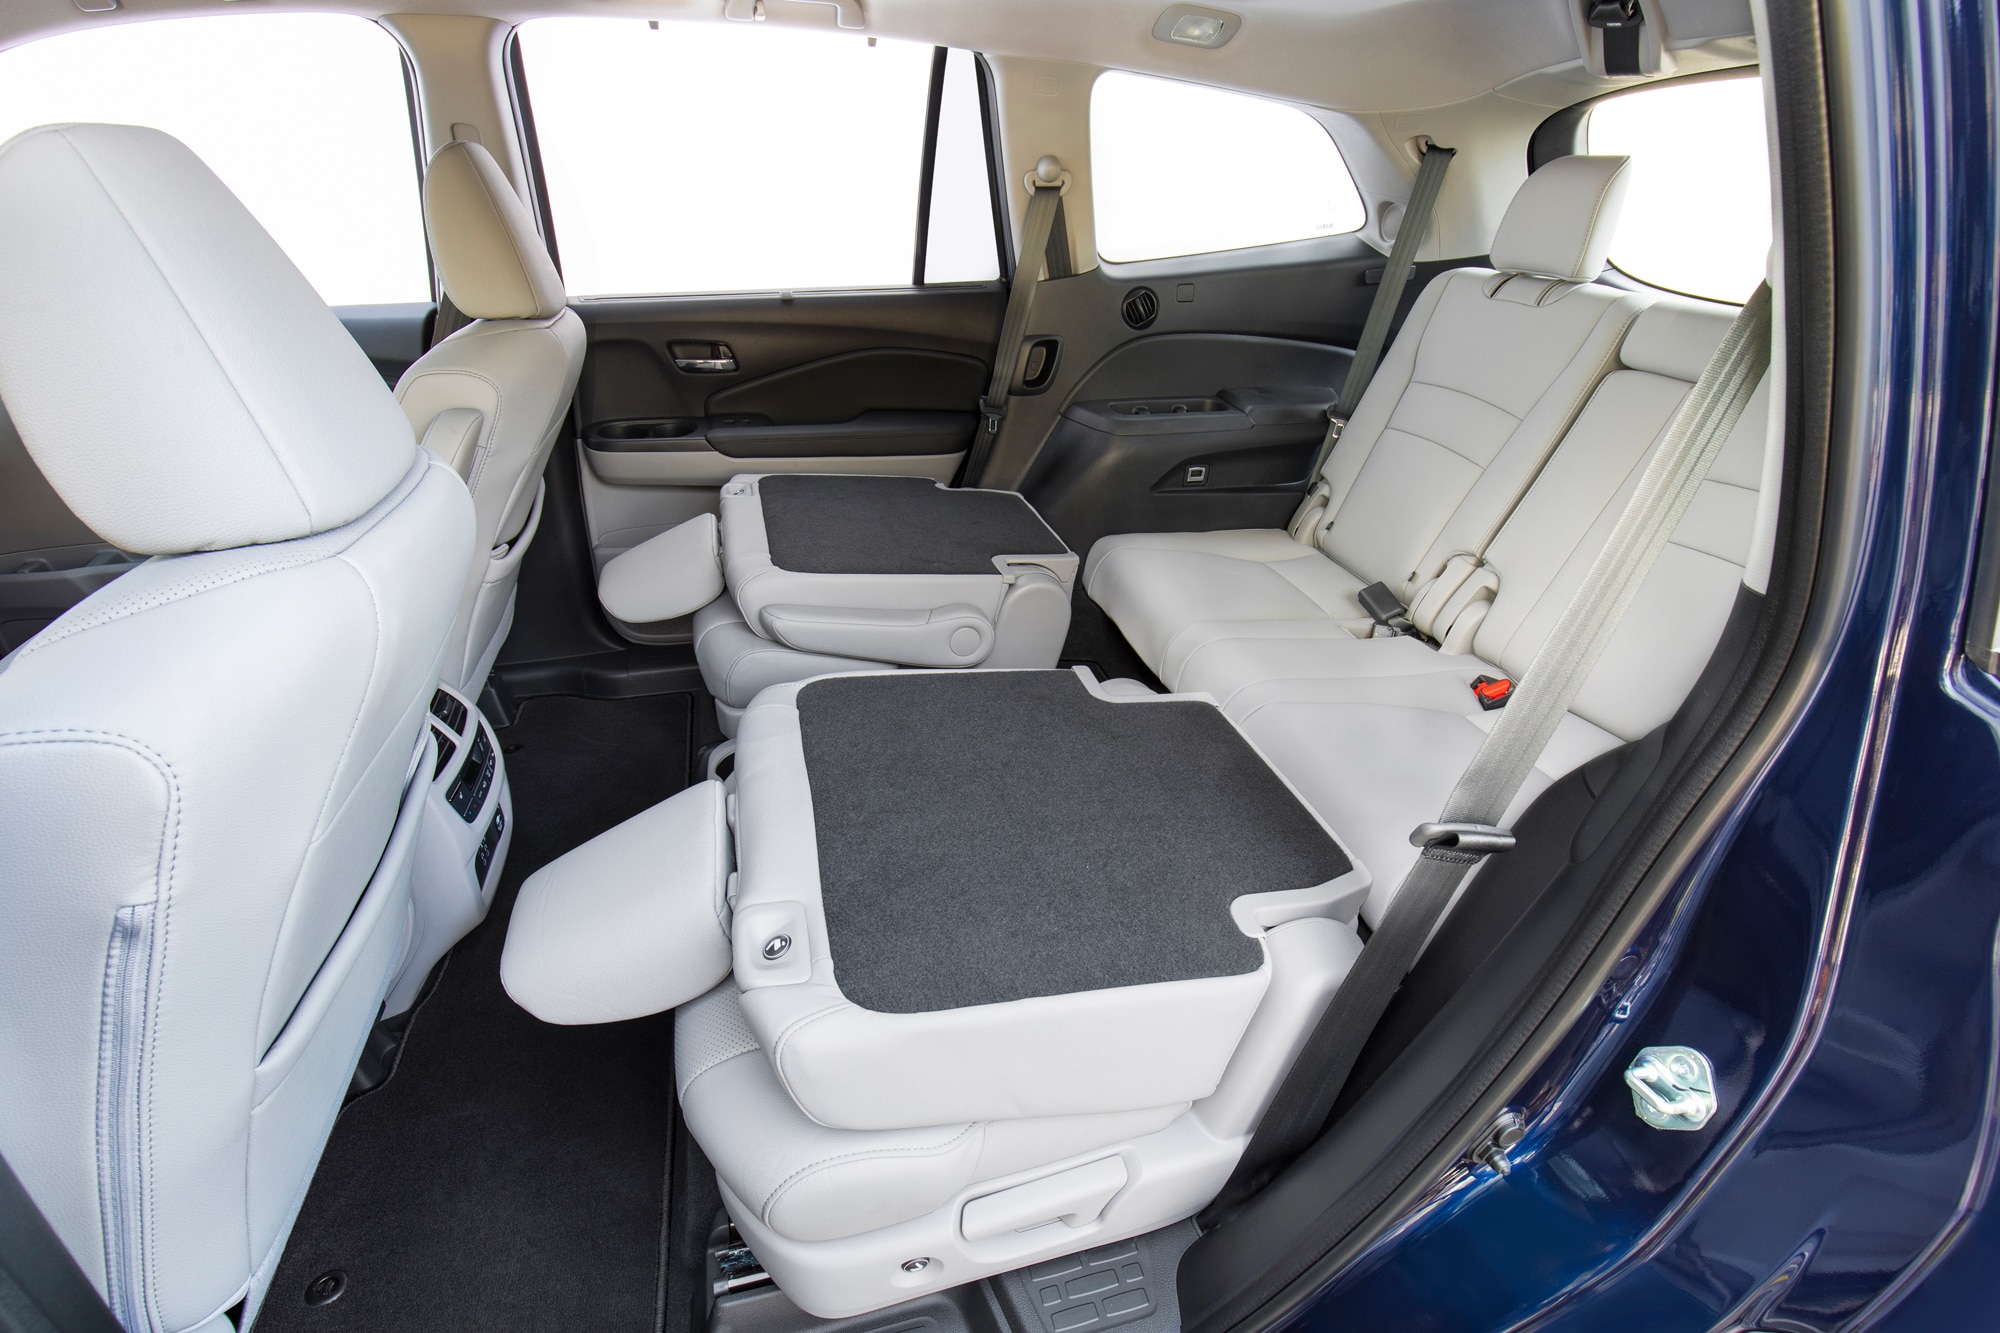 Honda Pilot interior seats